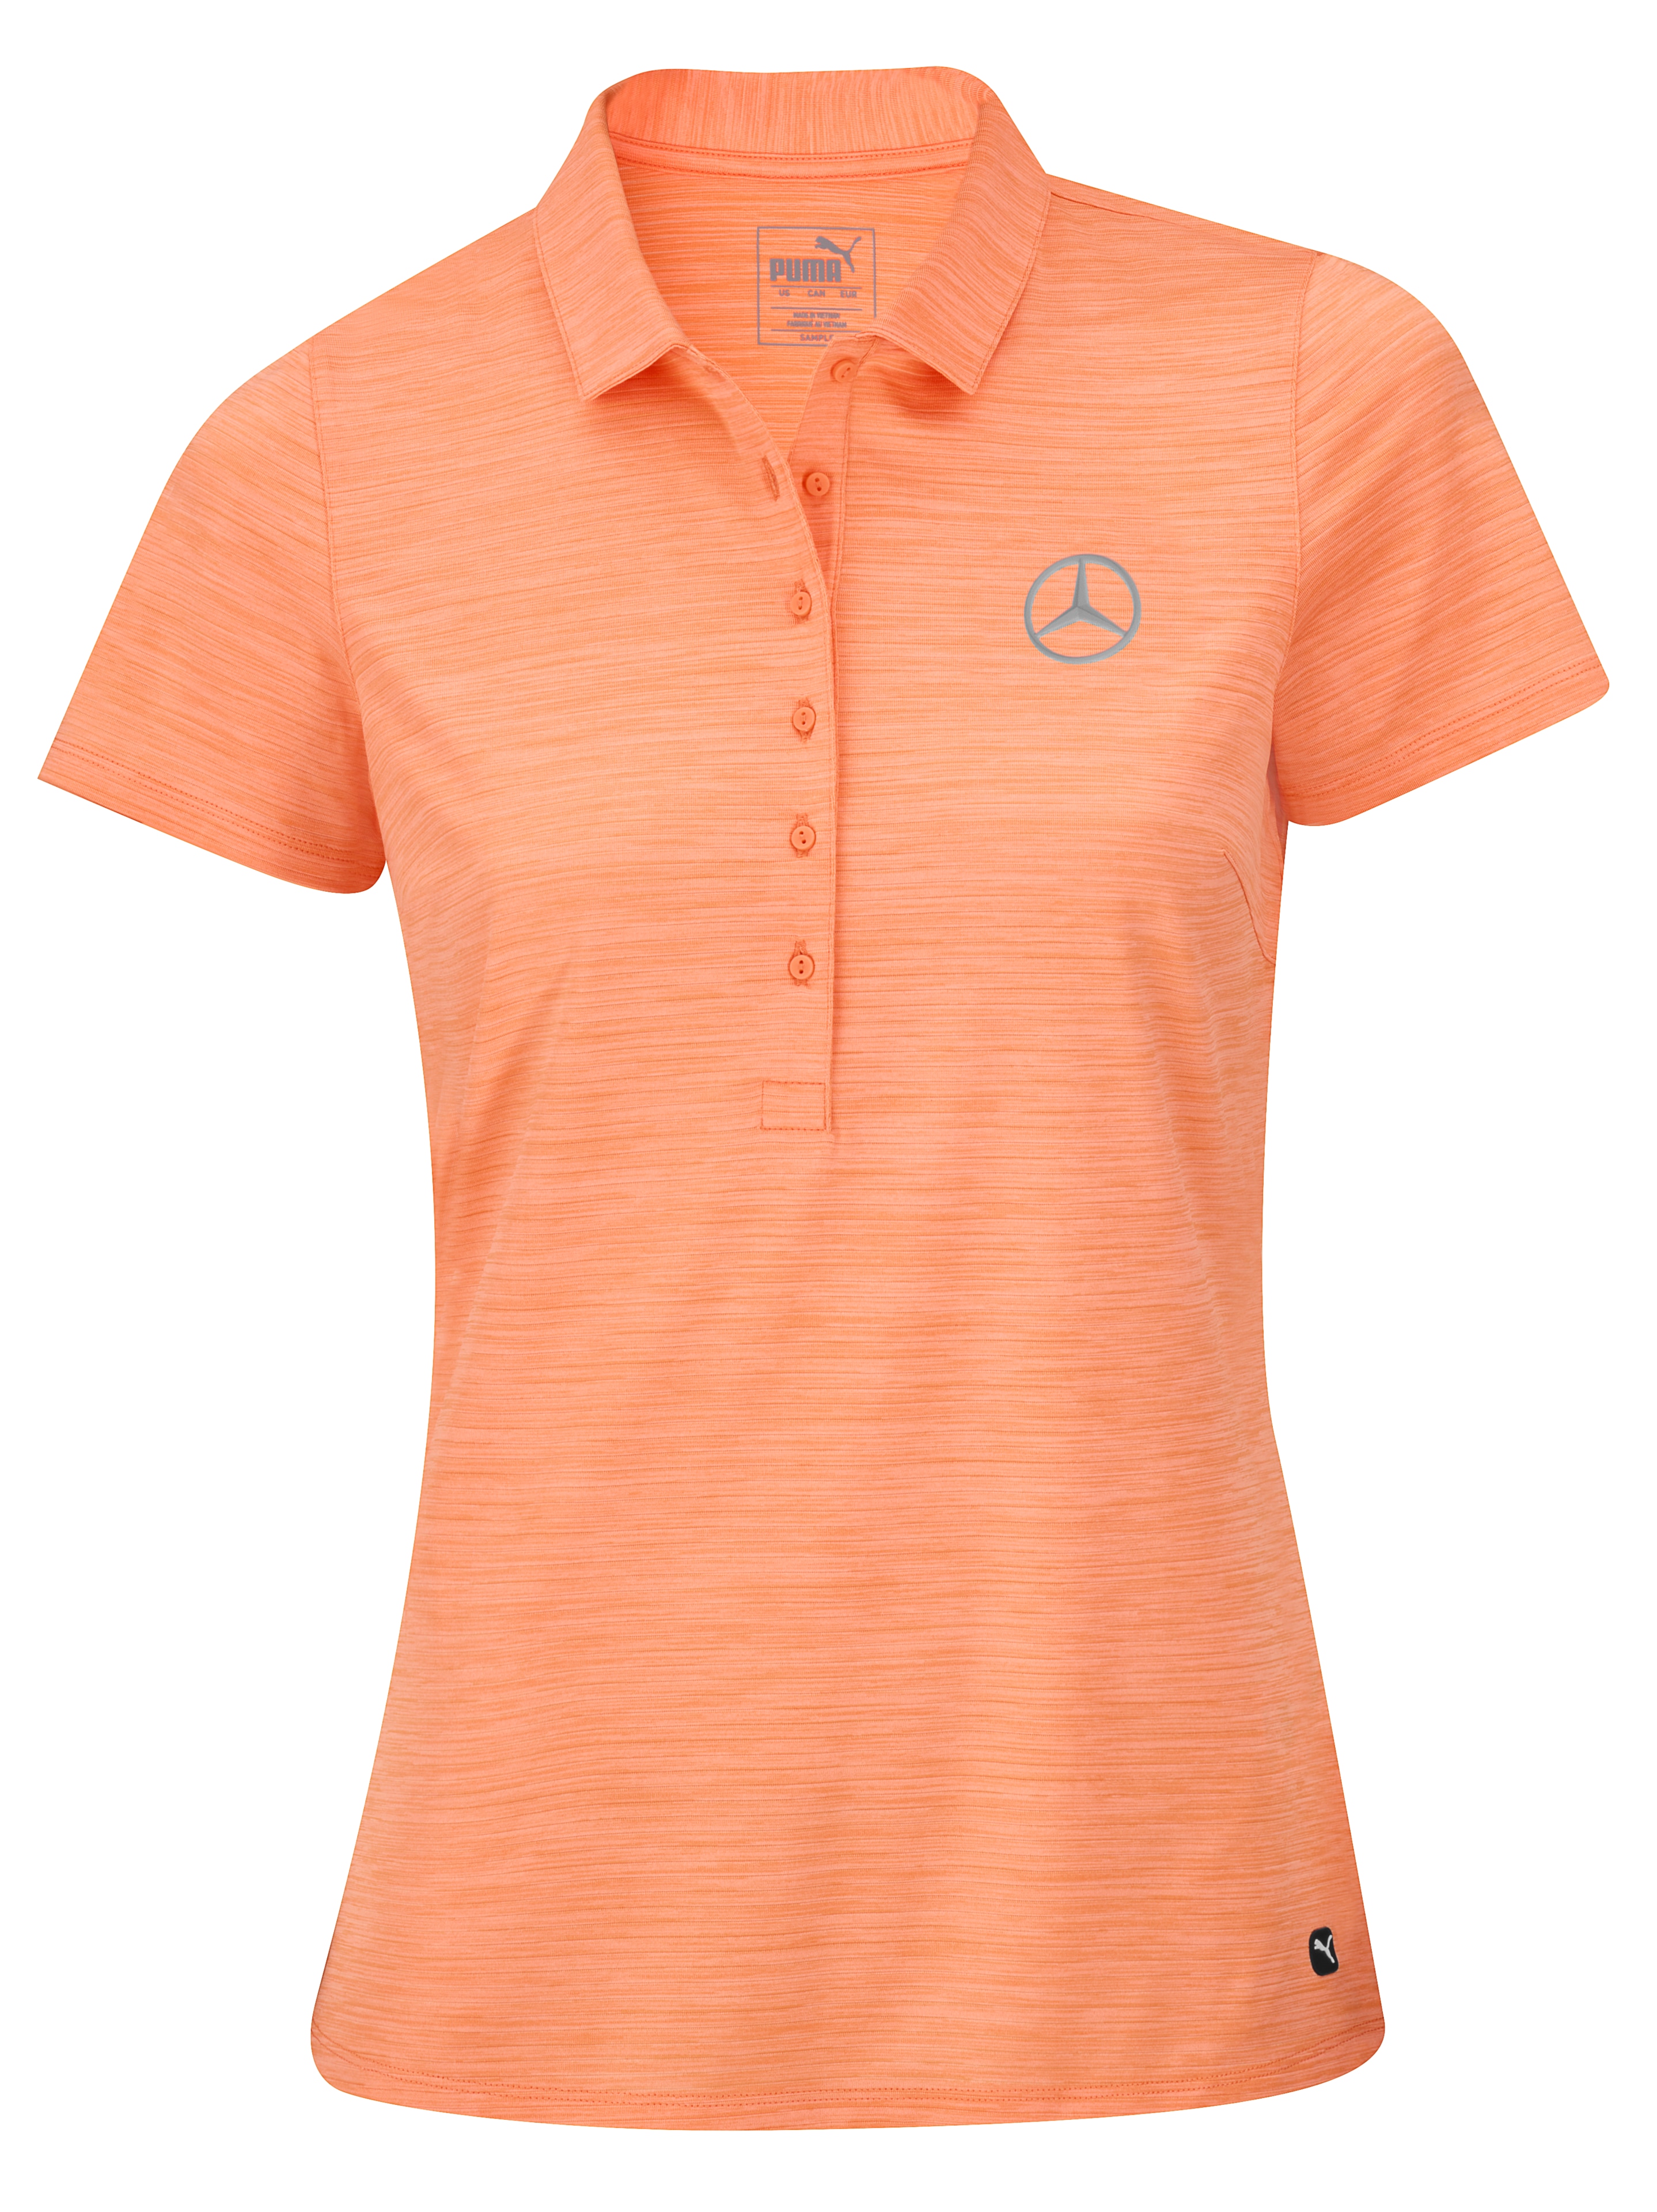 Golf-Poloshirt Damen - orange, XL